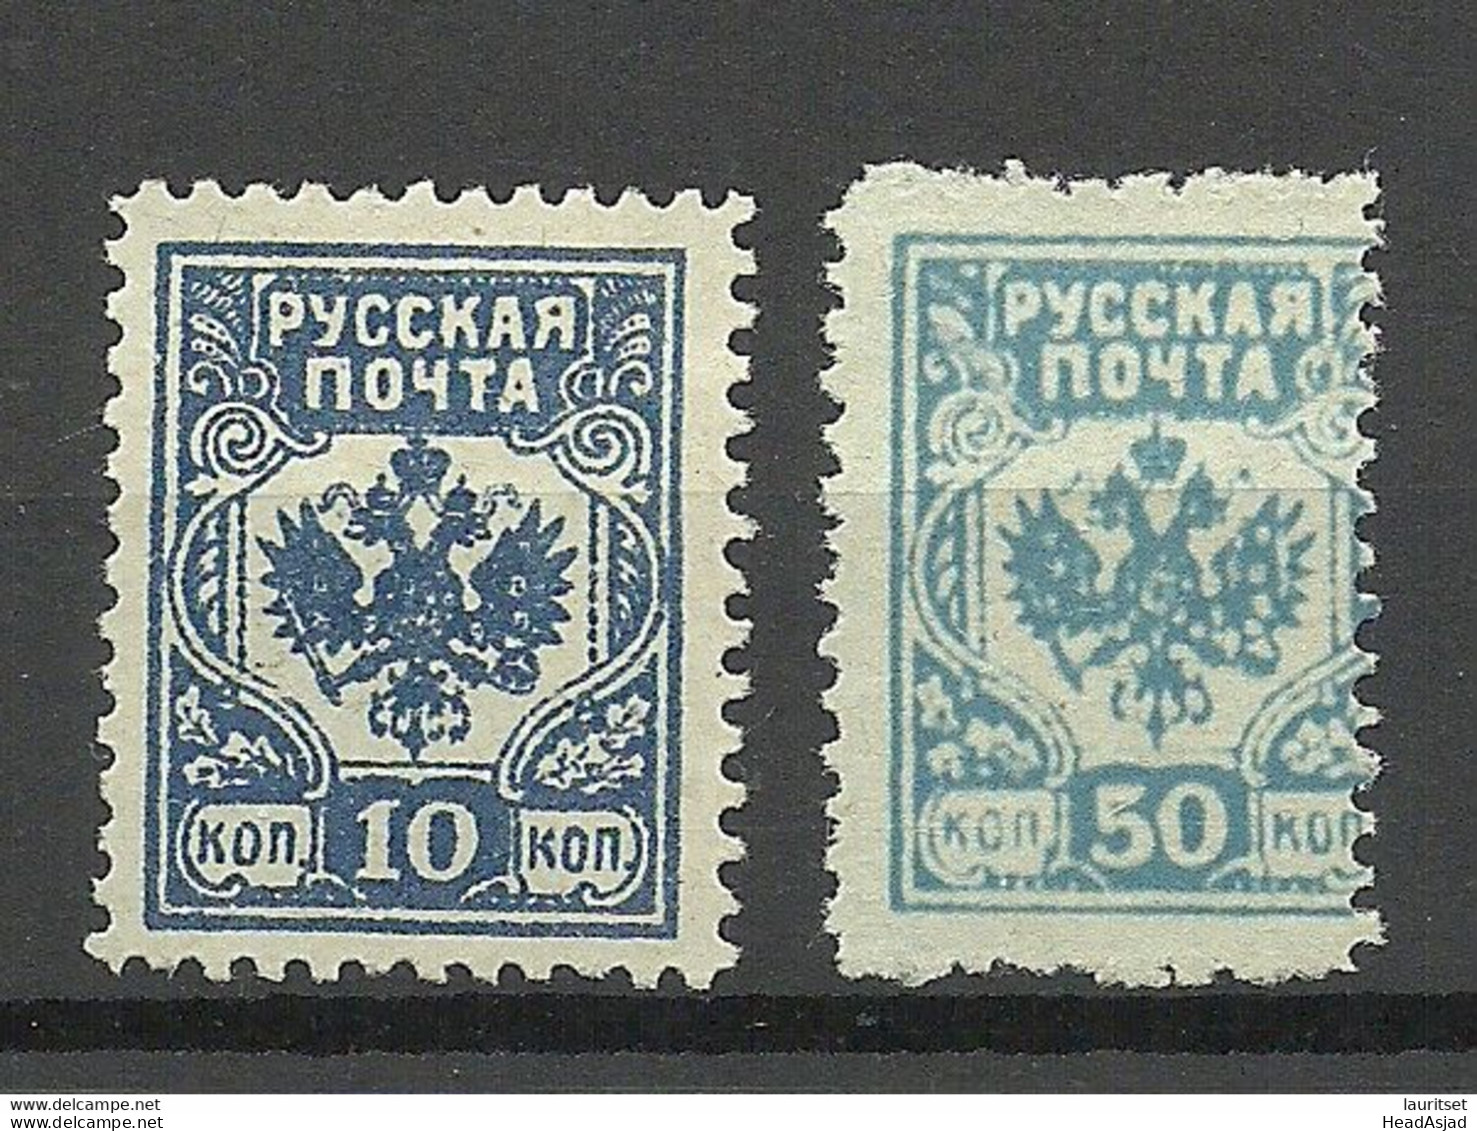 LETTLAND Latvia 1919 Westarmee Western Army General Bermondt - Avalov, 2 Stamps, Perforated Incl. Perforation Variety - Westarmee